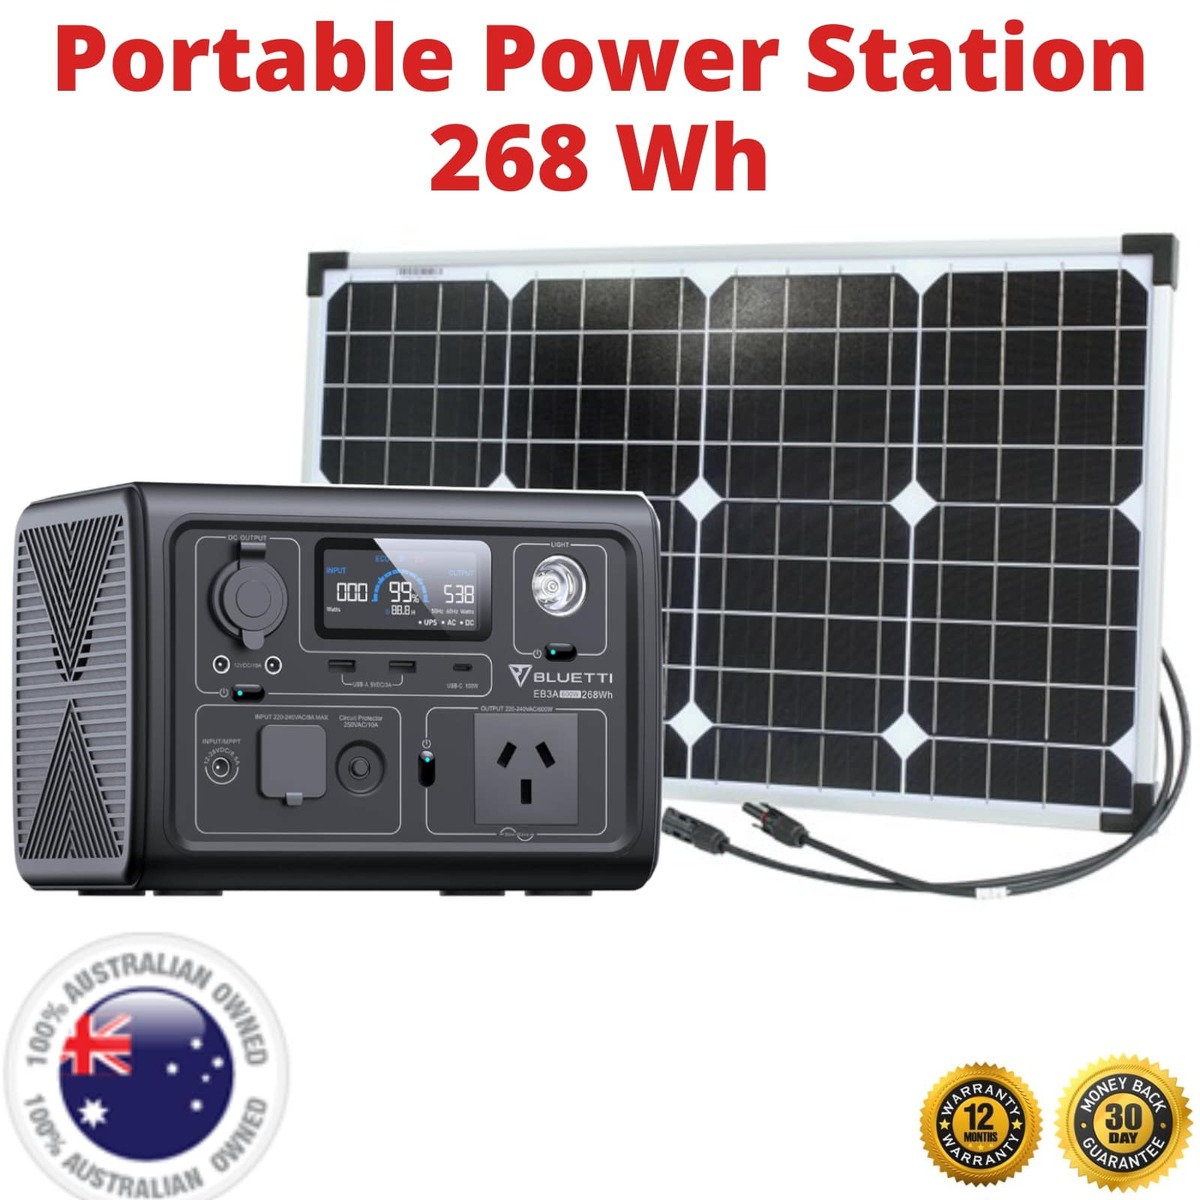 BLUETTI EB3A Portable Power Station 268Wh LiFePO4 Battery 600W Solar  Generator